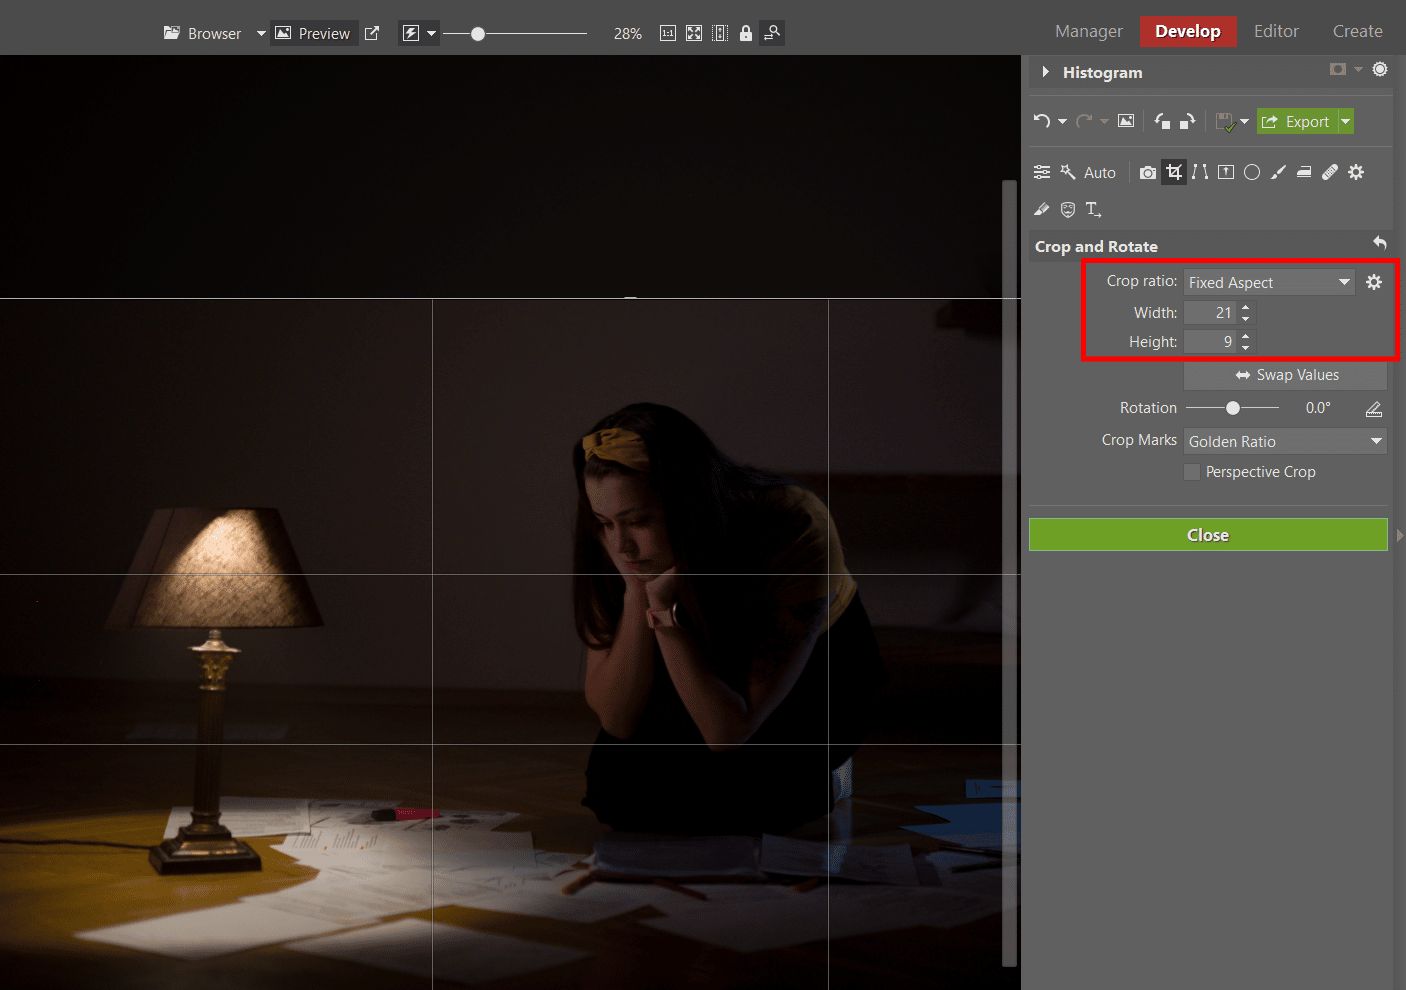 ZPS X Editing School III: Make Cinematic Edits to Your Photos